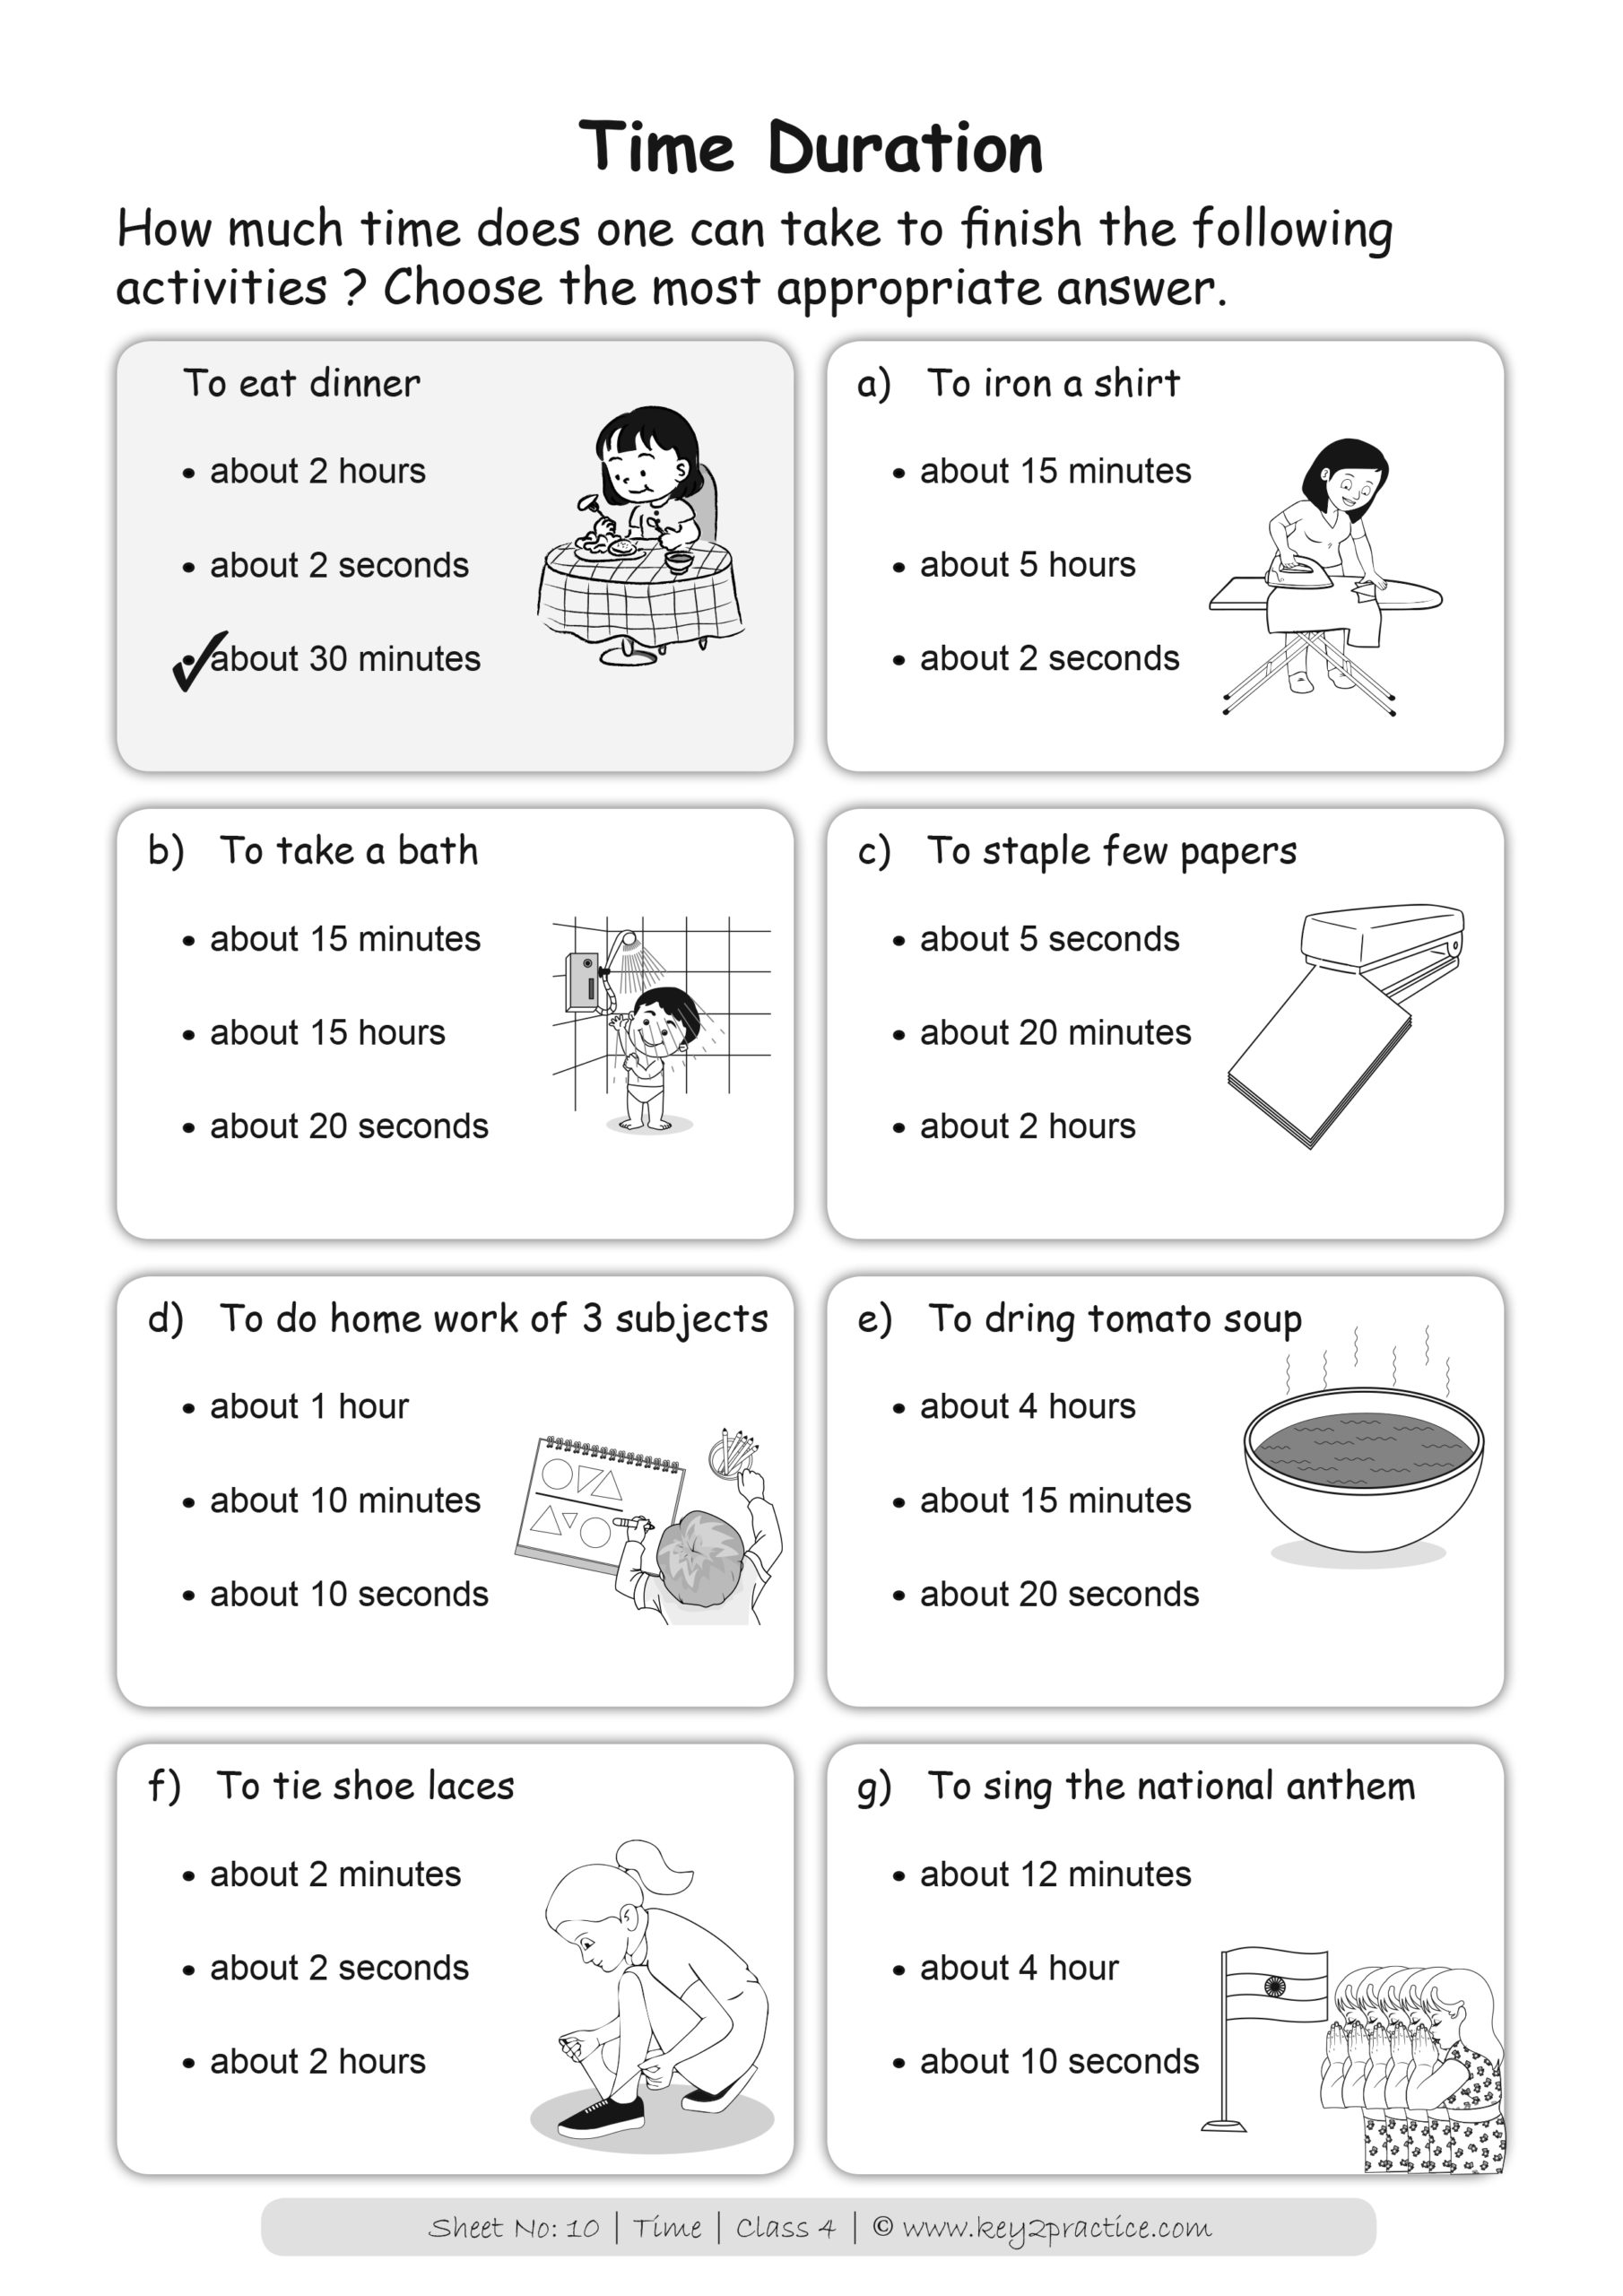 Soil Edwayz Class 4 Grade 4 Evs Freeworksheets Evs Worksheet Class I Lesson 4 Clothes